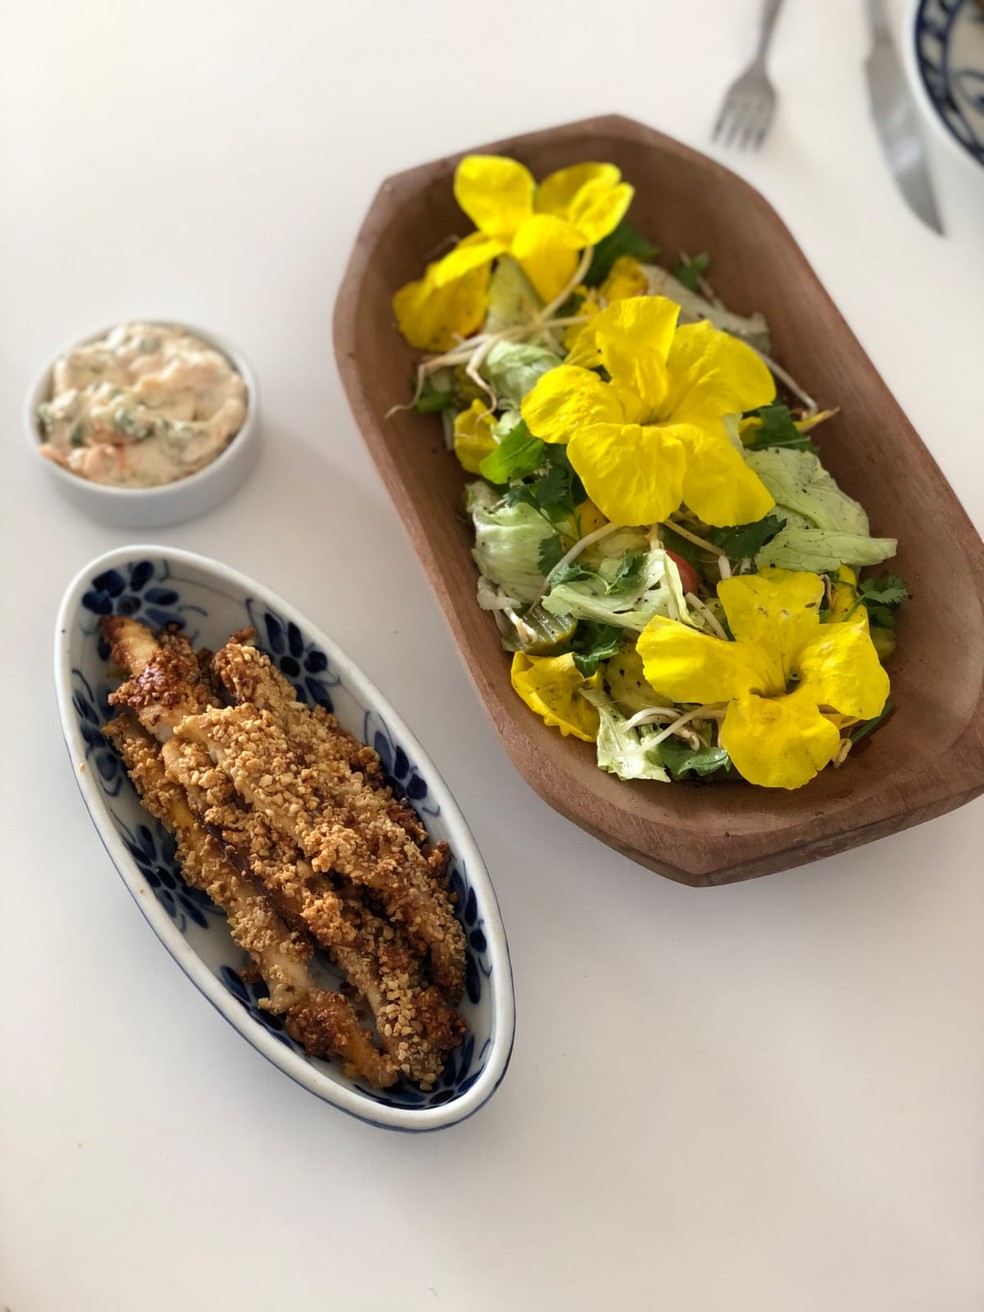 Salada, peixe e molho tártaro — Foto: Bell Villanova